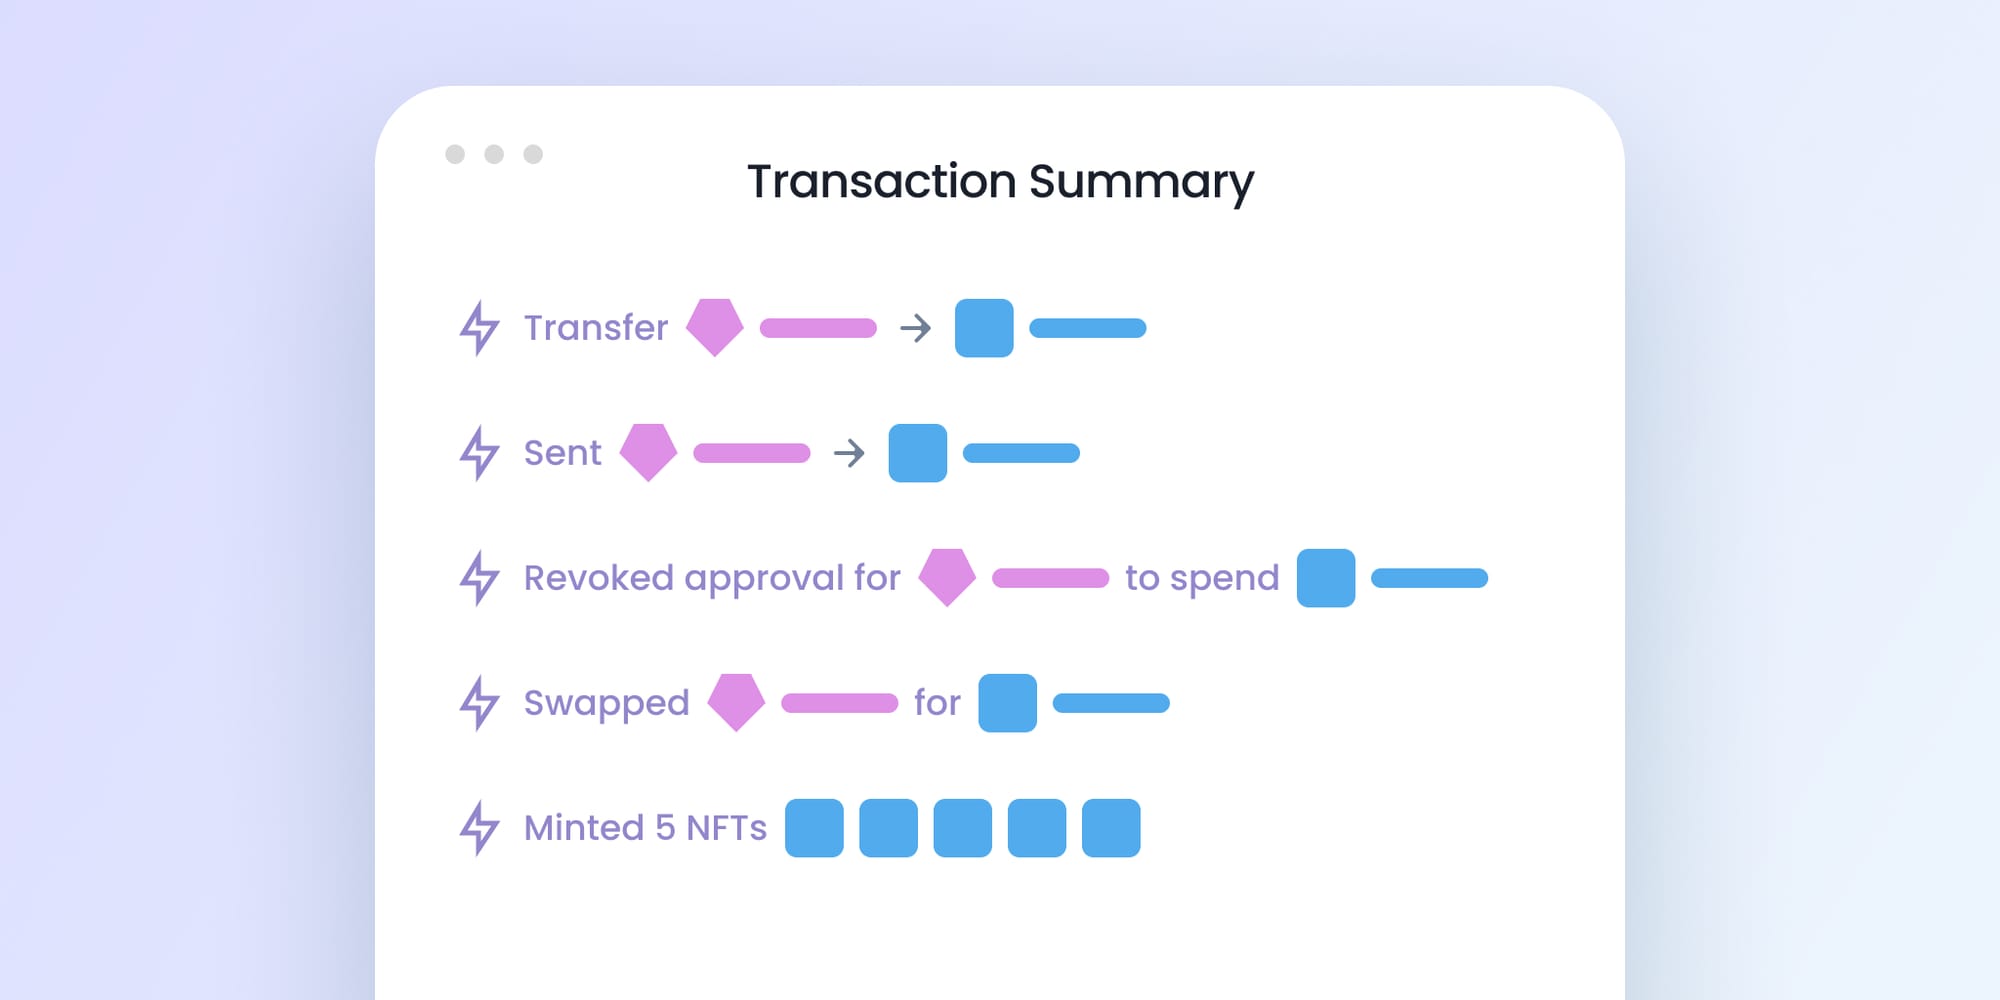 Noves transaction summary on Blockscout